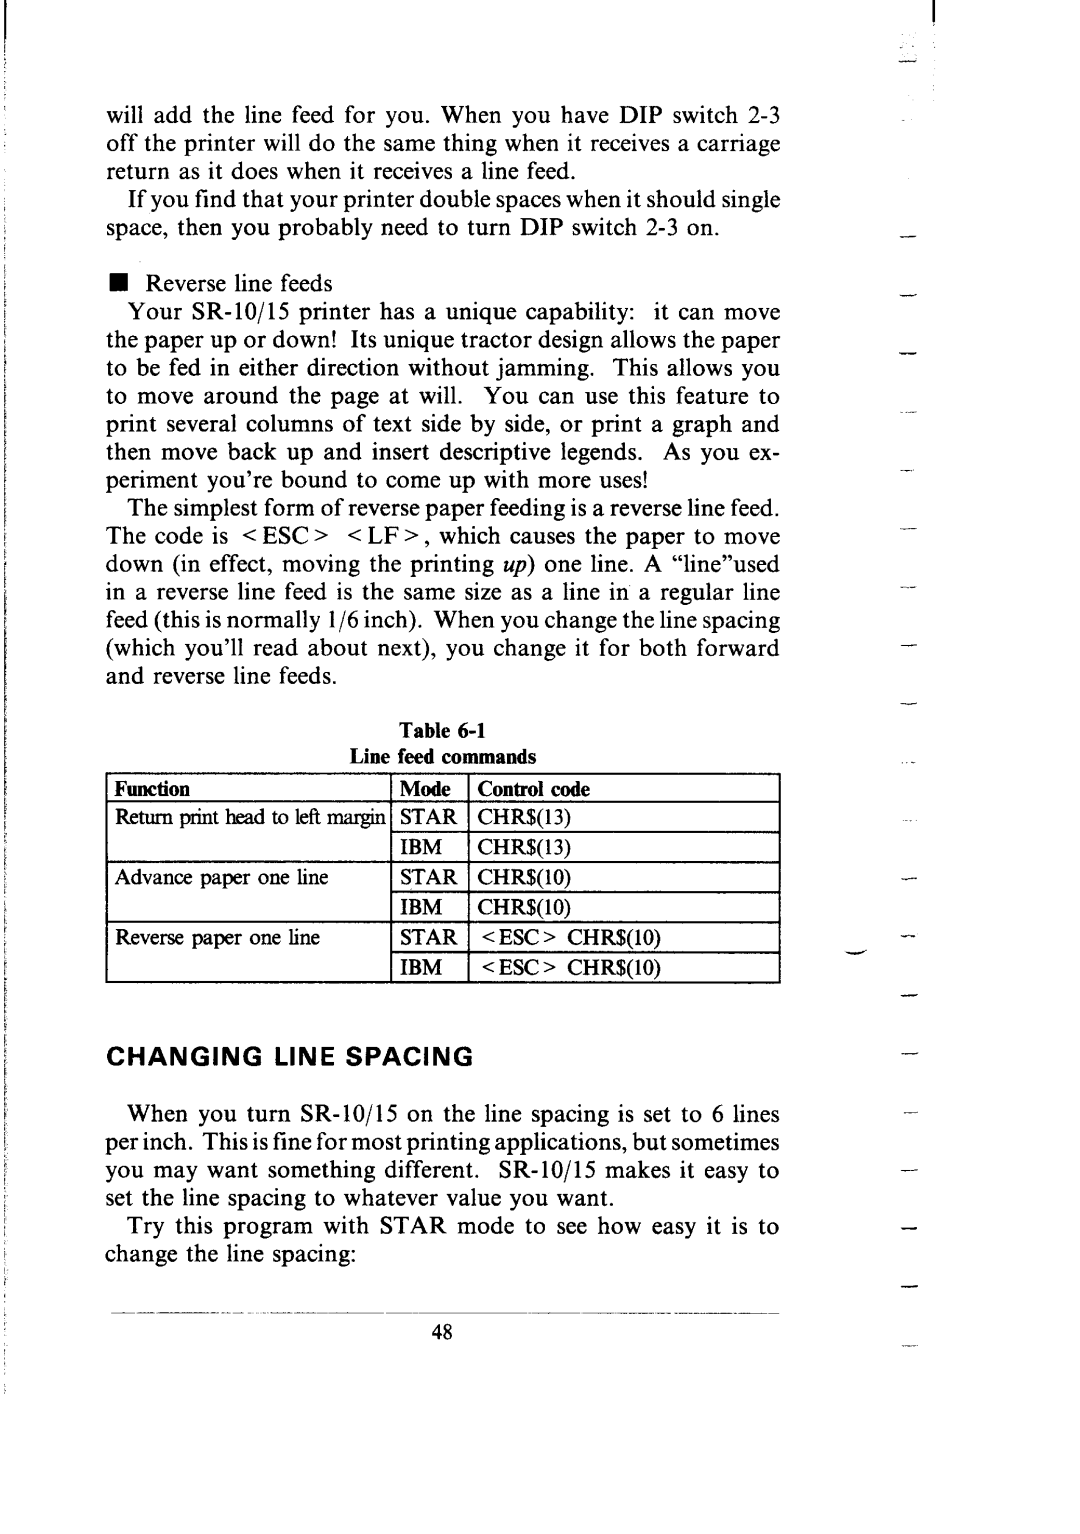 Star Micronics SR-10/I5 user manual Changing Line Spacing 